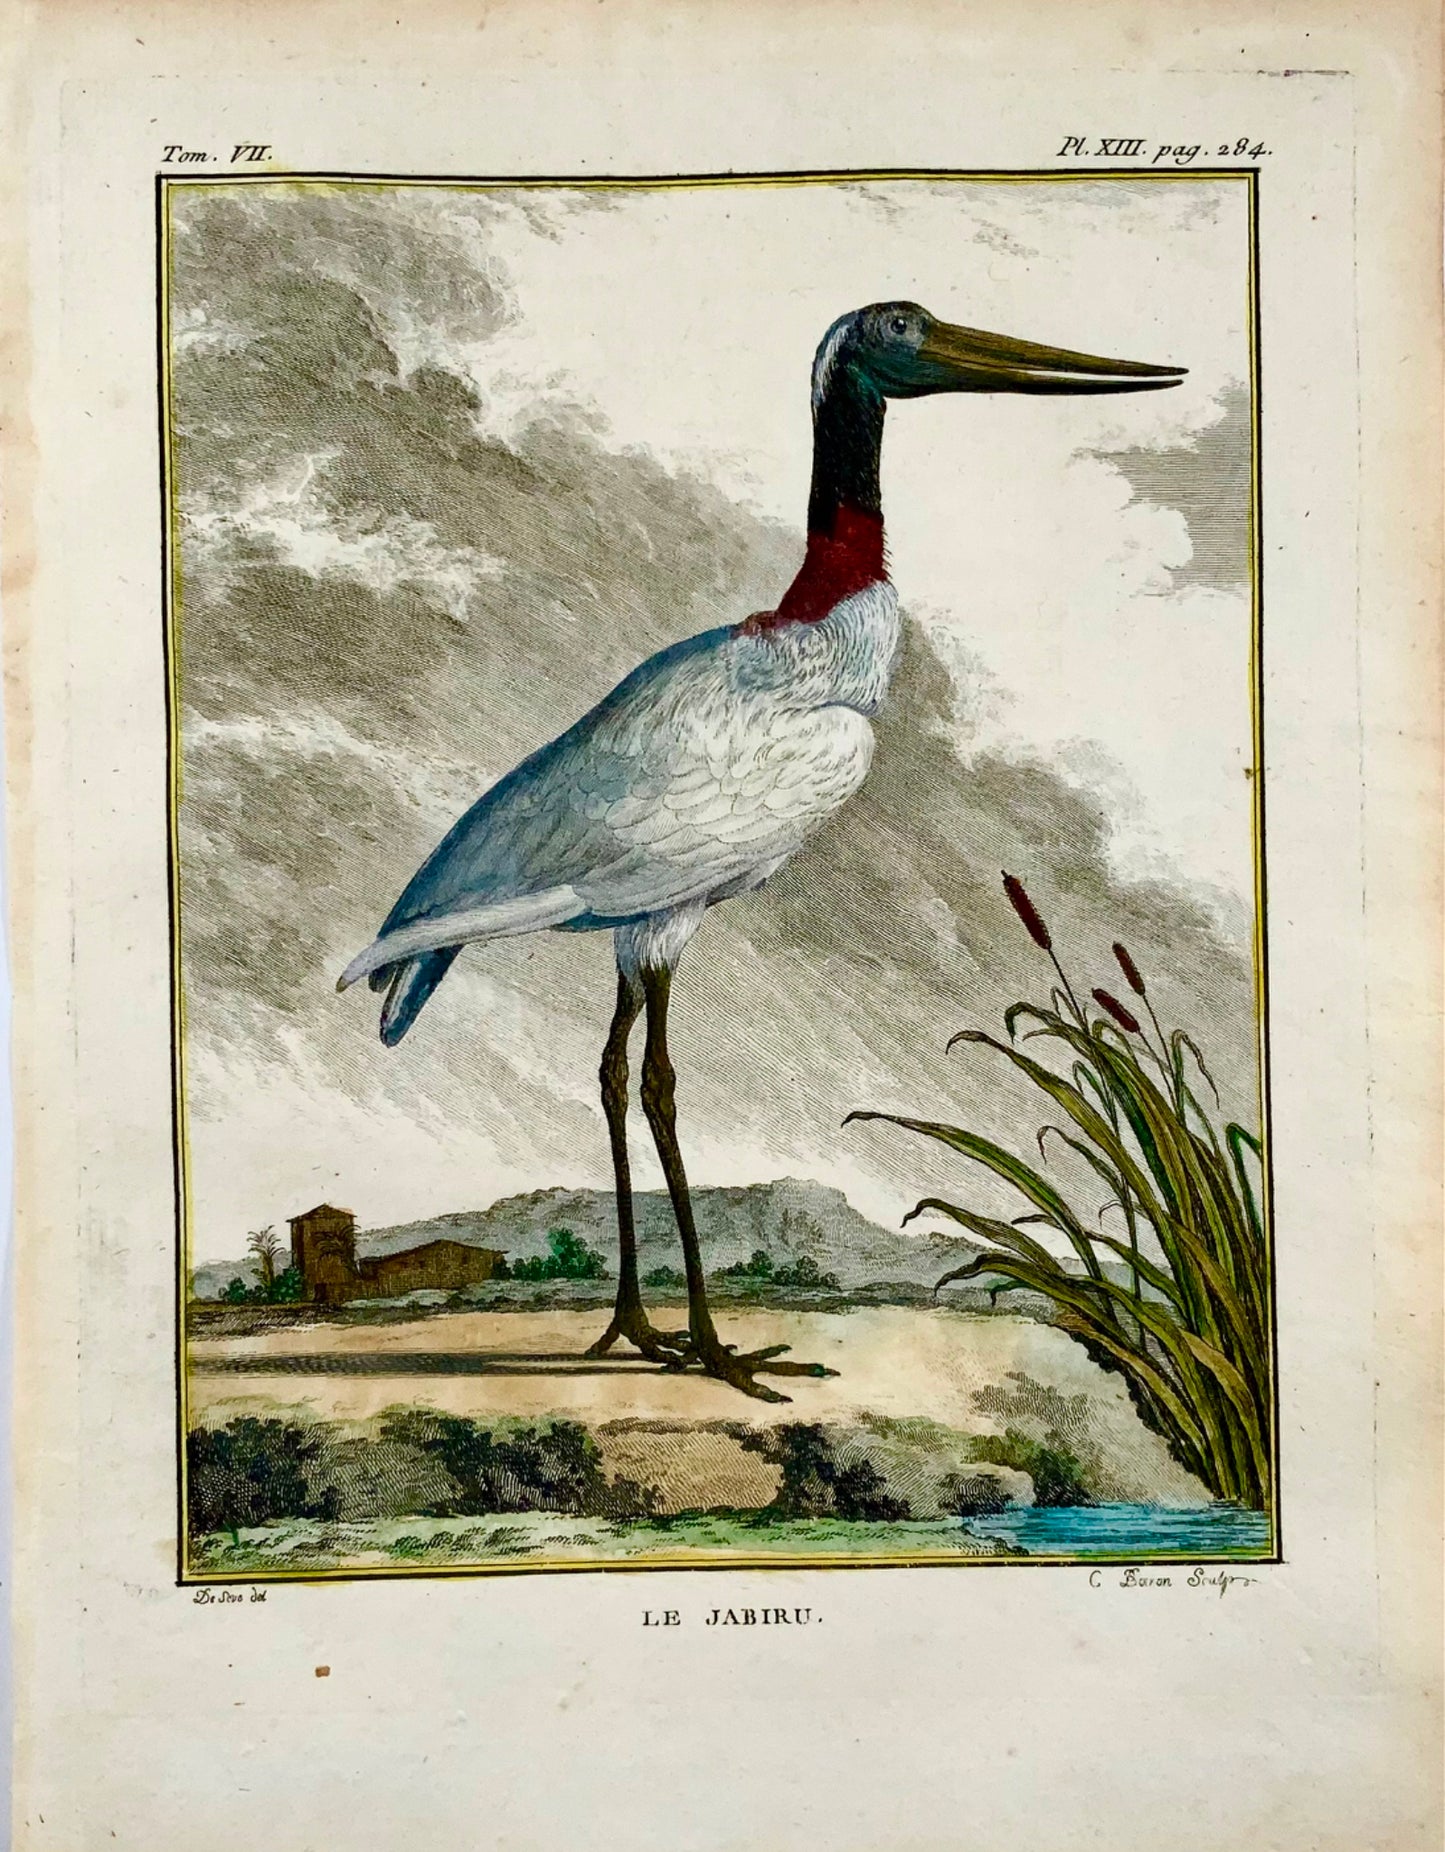 1779 de Seve - JABIRU Bird - Ornithology - 4to Large Edn engraving